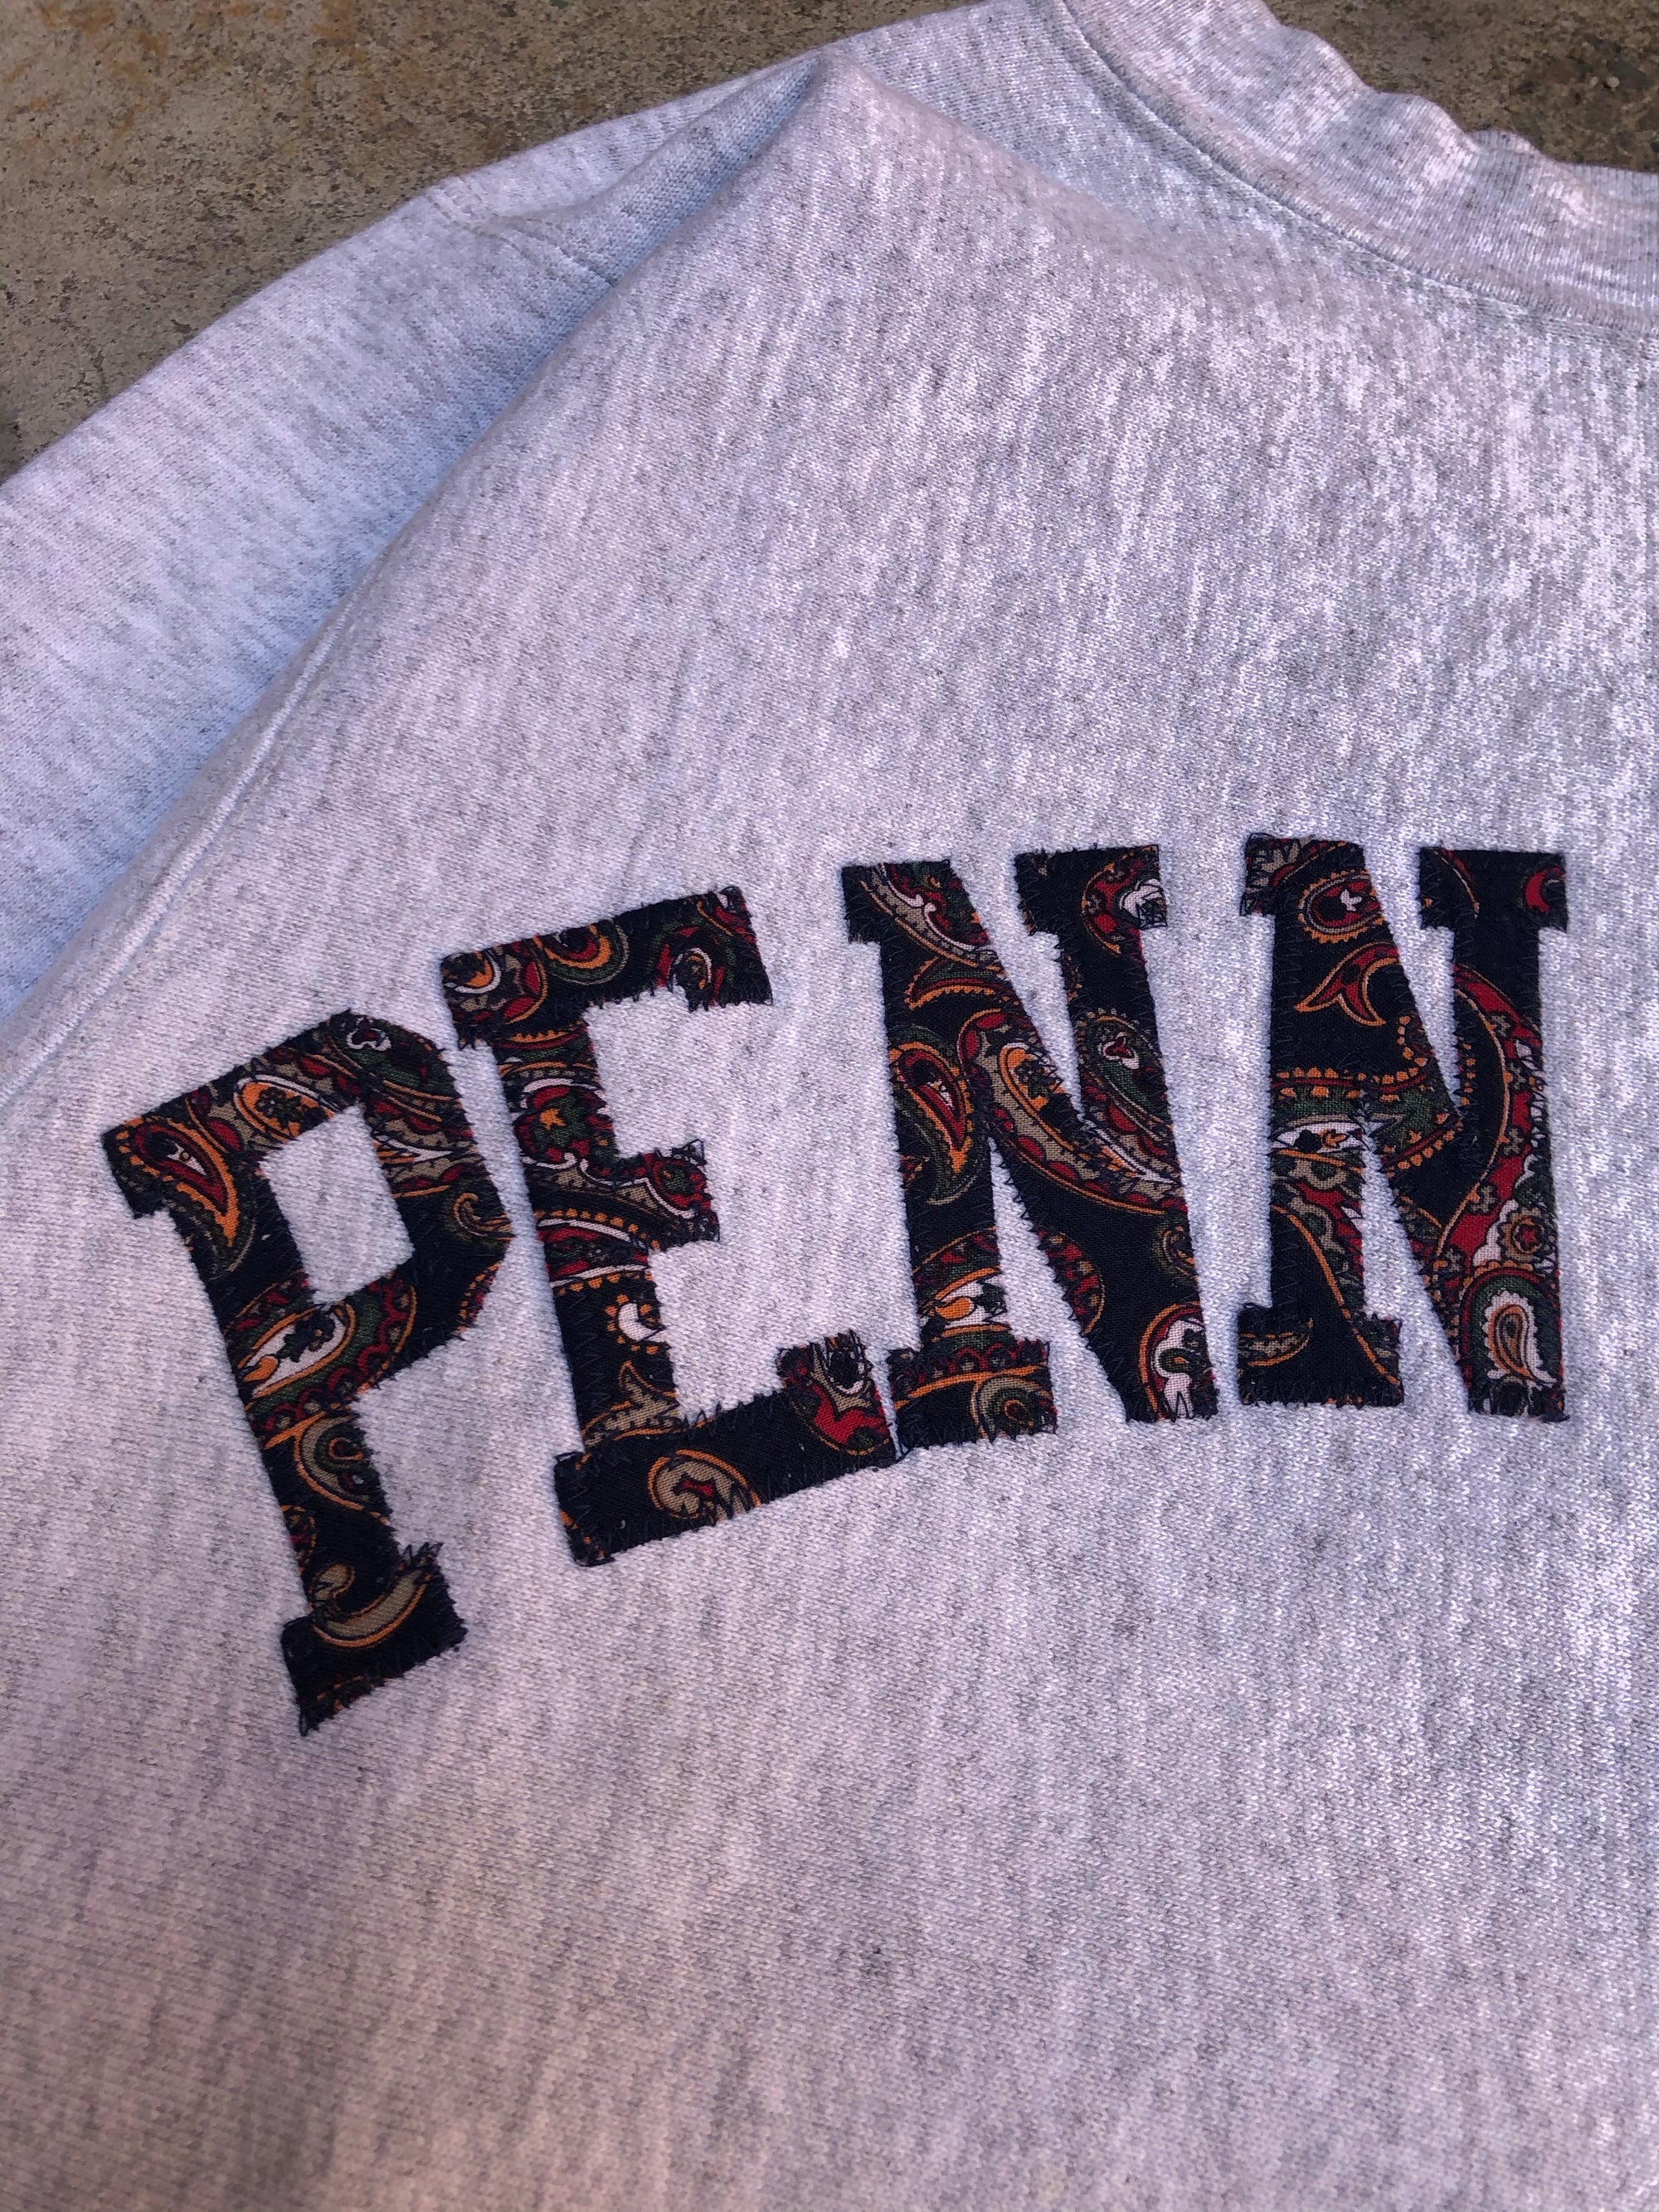 1990s Paisley Heather Grey “Penn State” Sweatshirt